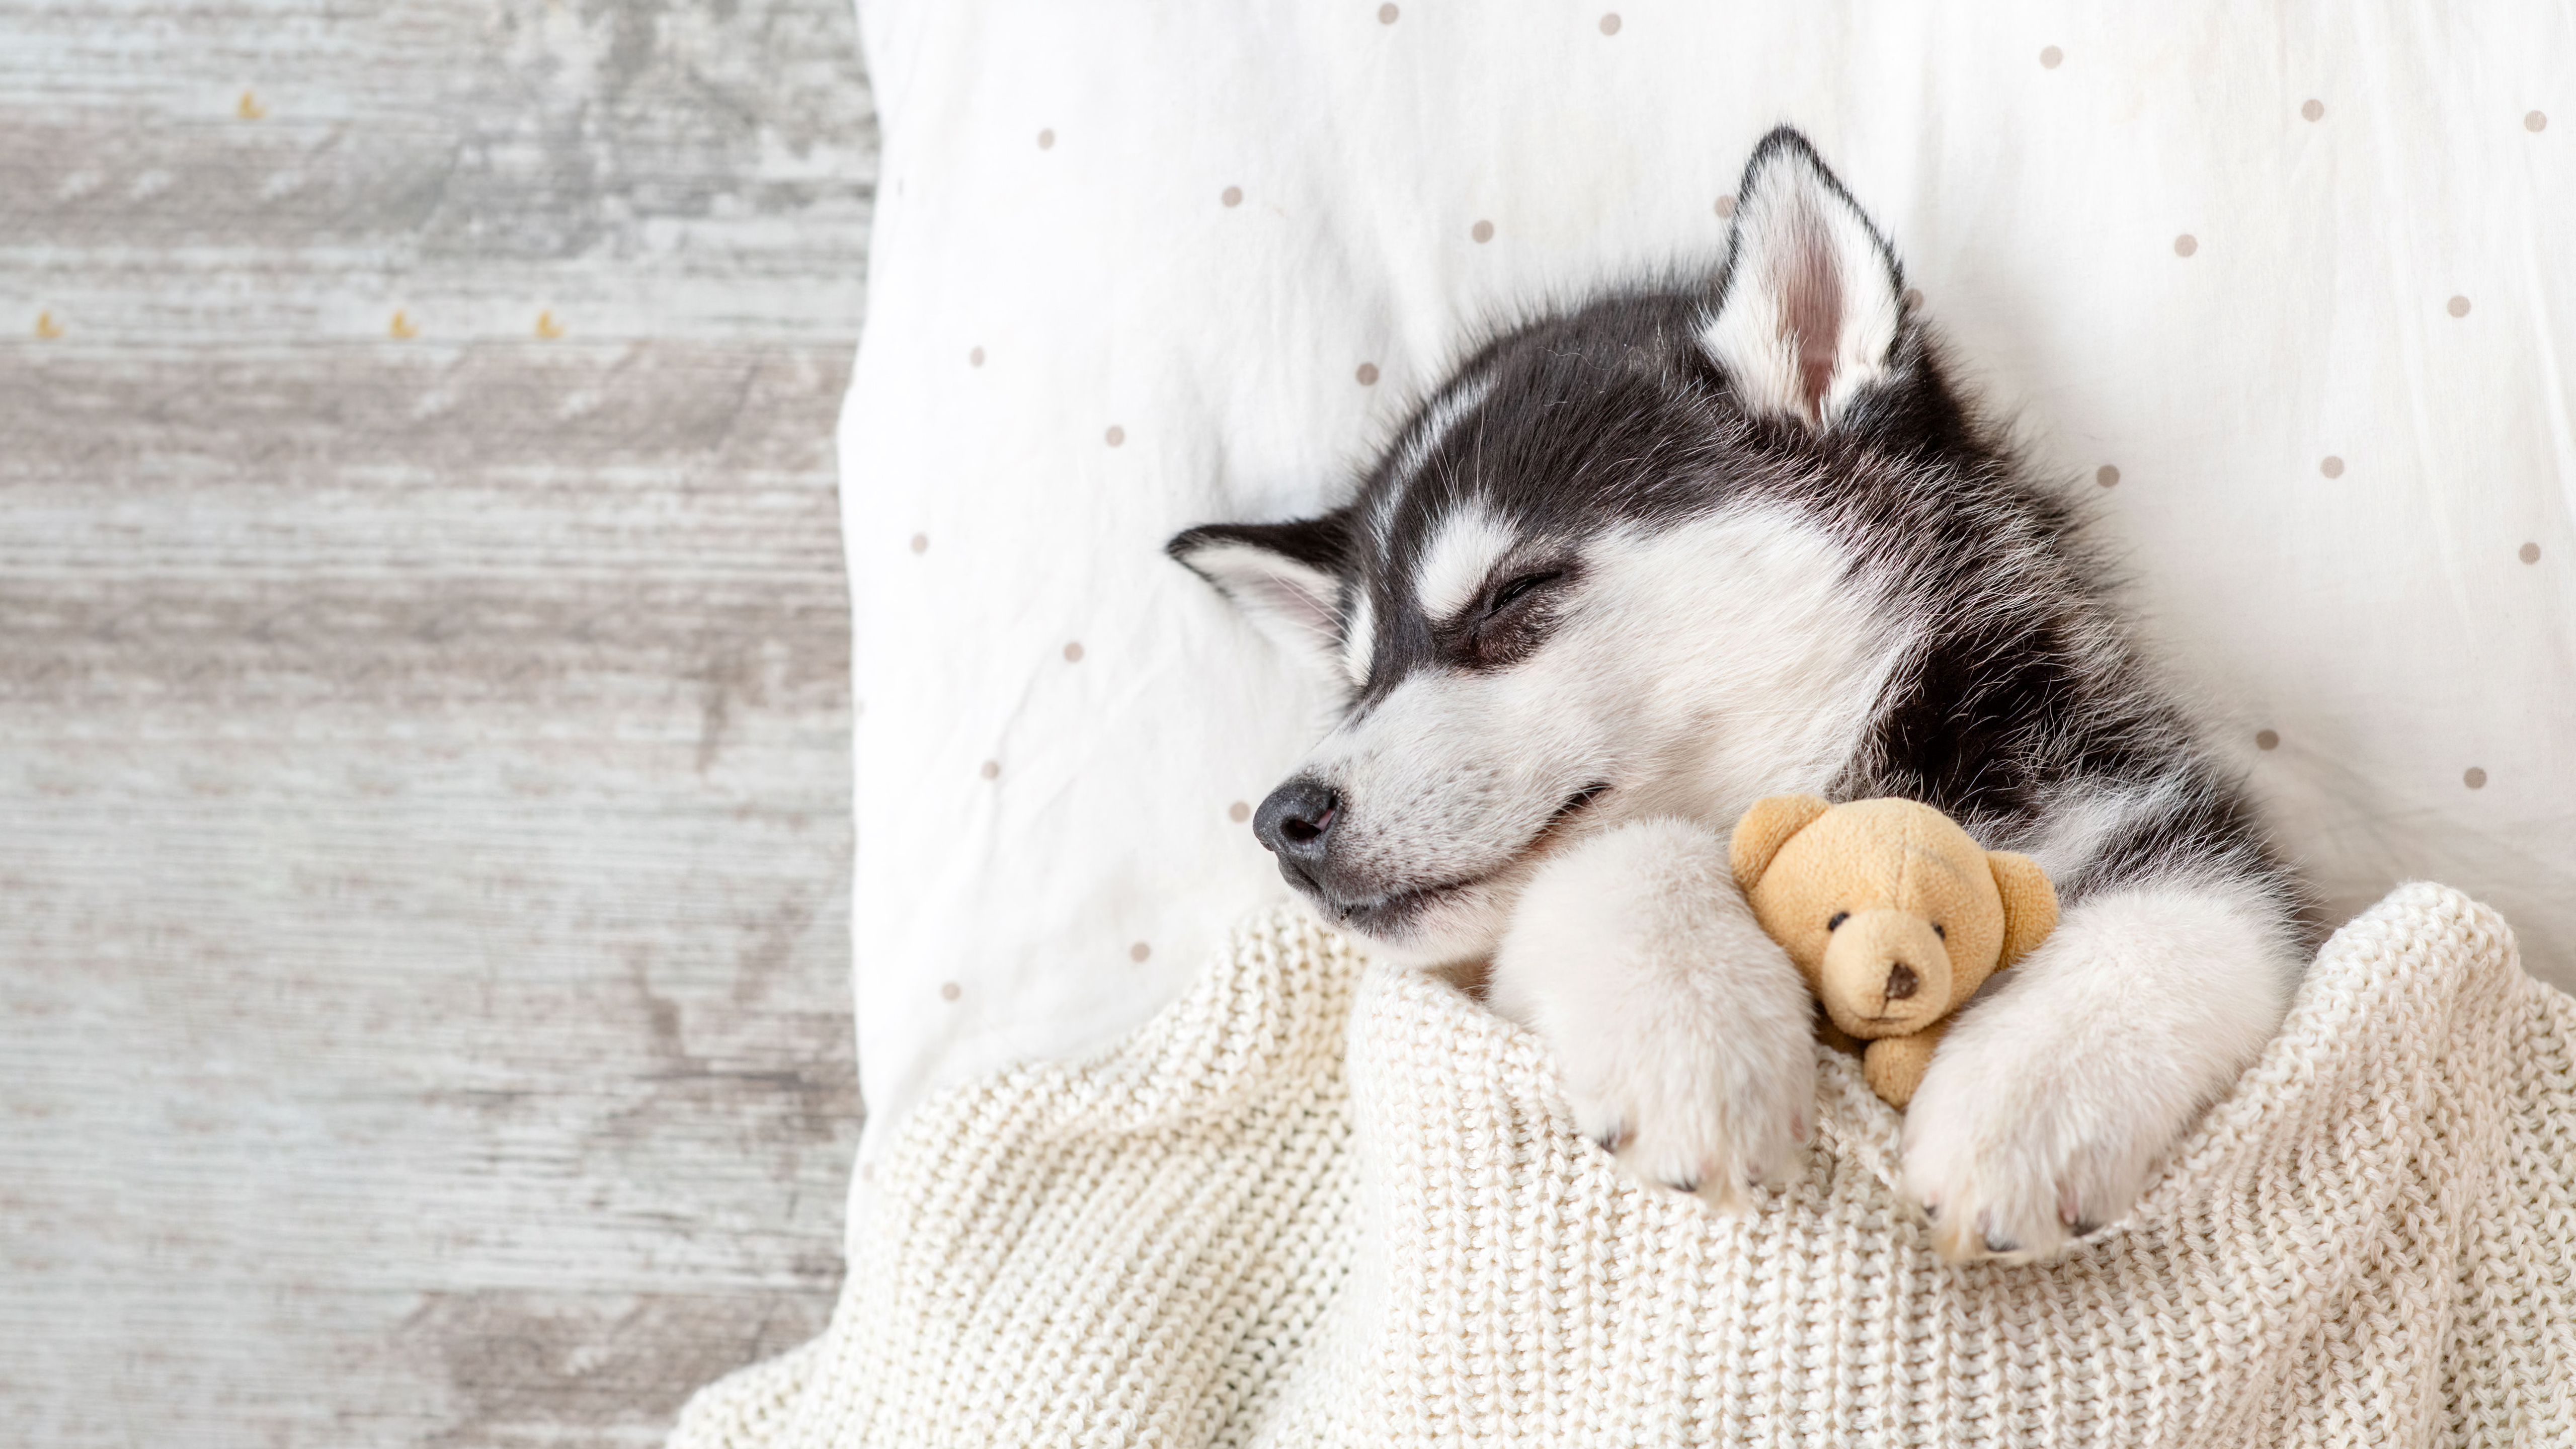 HD wallpaper, White Aesthetic, Blanket, Warm, Adorable, Siberian Husky, Breed Dog, 5K, Teddy Bear, Sleeping, Cozy